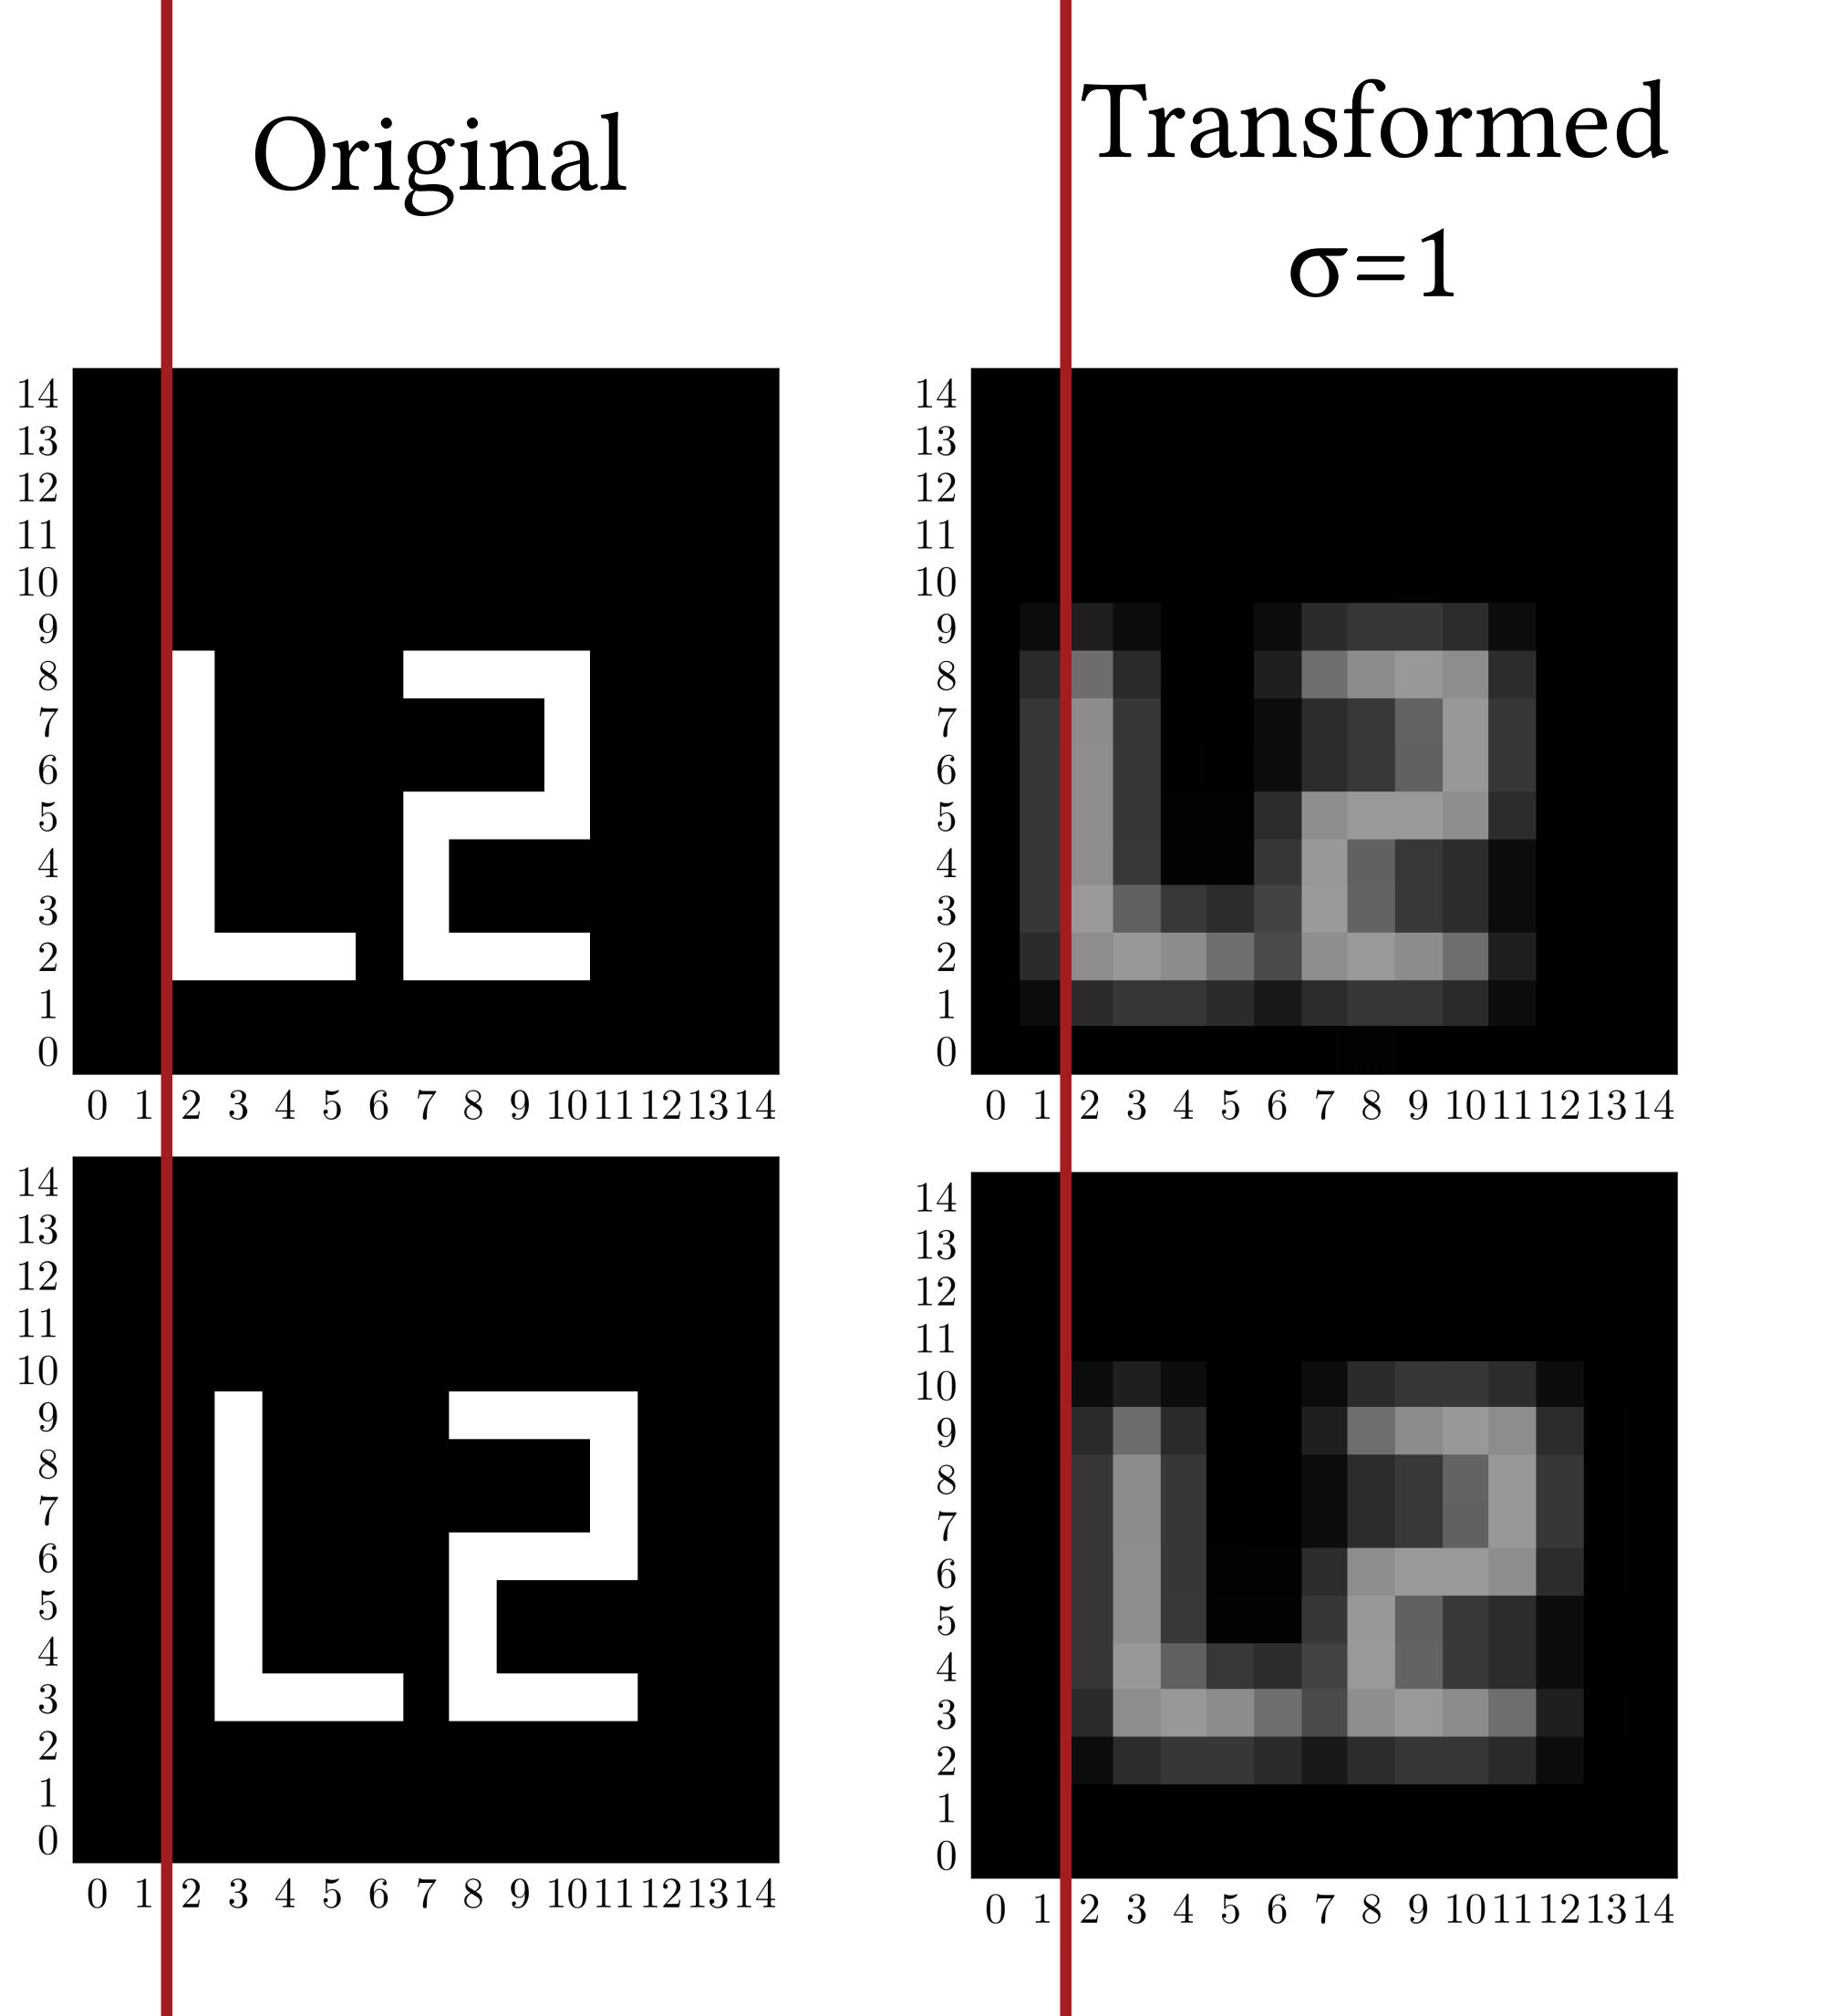 Forward transform of 2D images alter the L2 distance, reduces noise